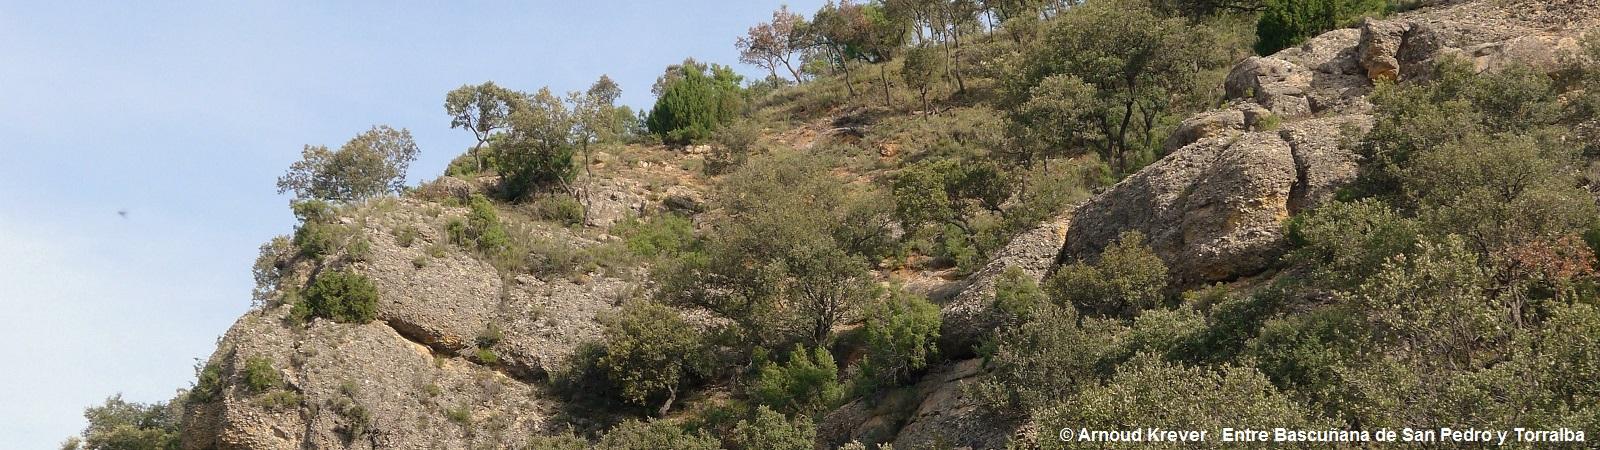 15Lana (1212) Tussen Bascuñana de San Pedro en Torralba, bos op kloofwand